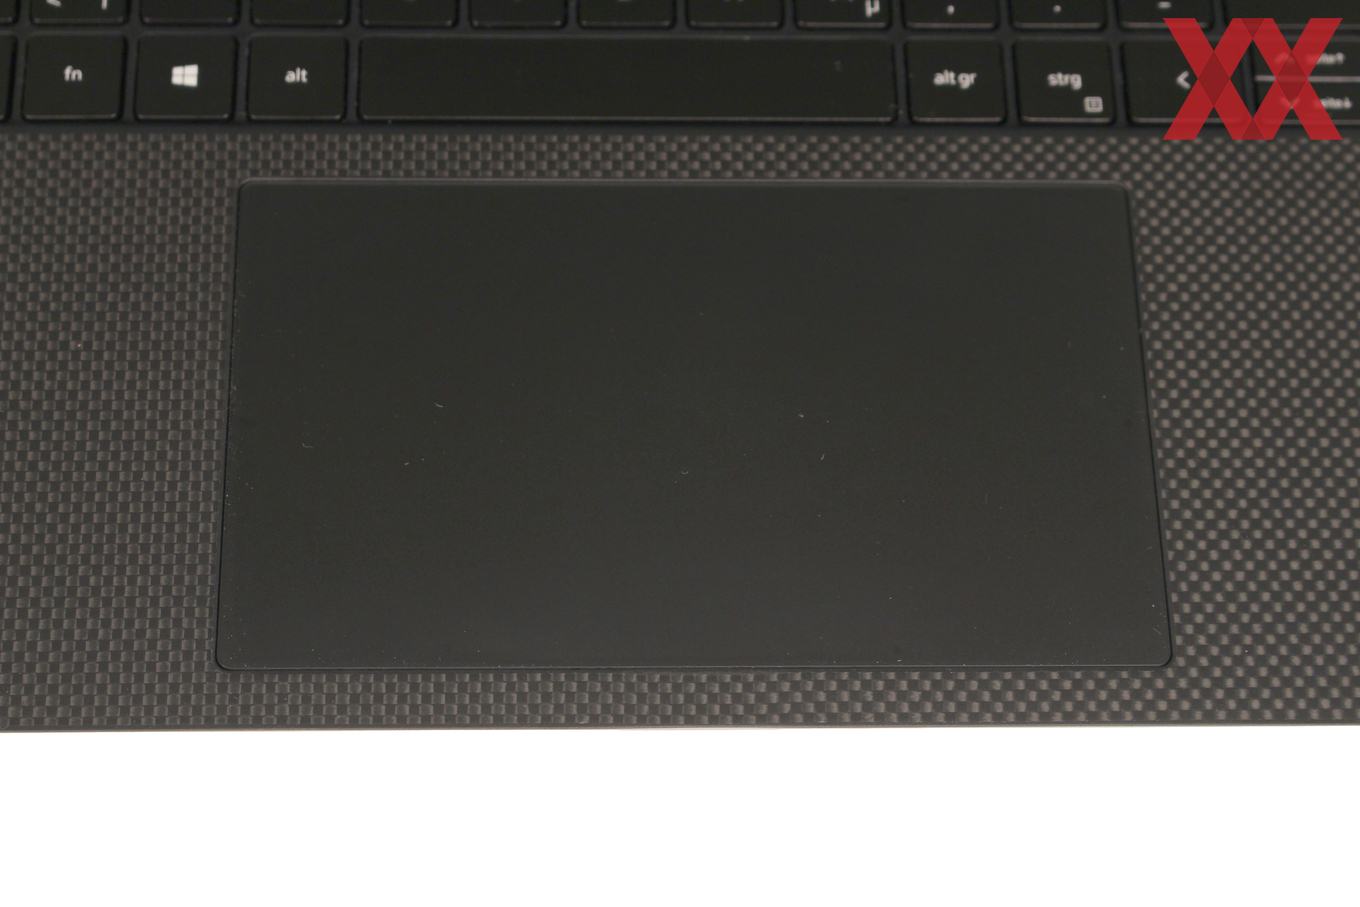 Ноутбук Dell Xps 17 Купить